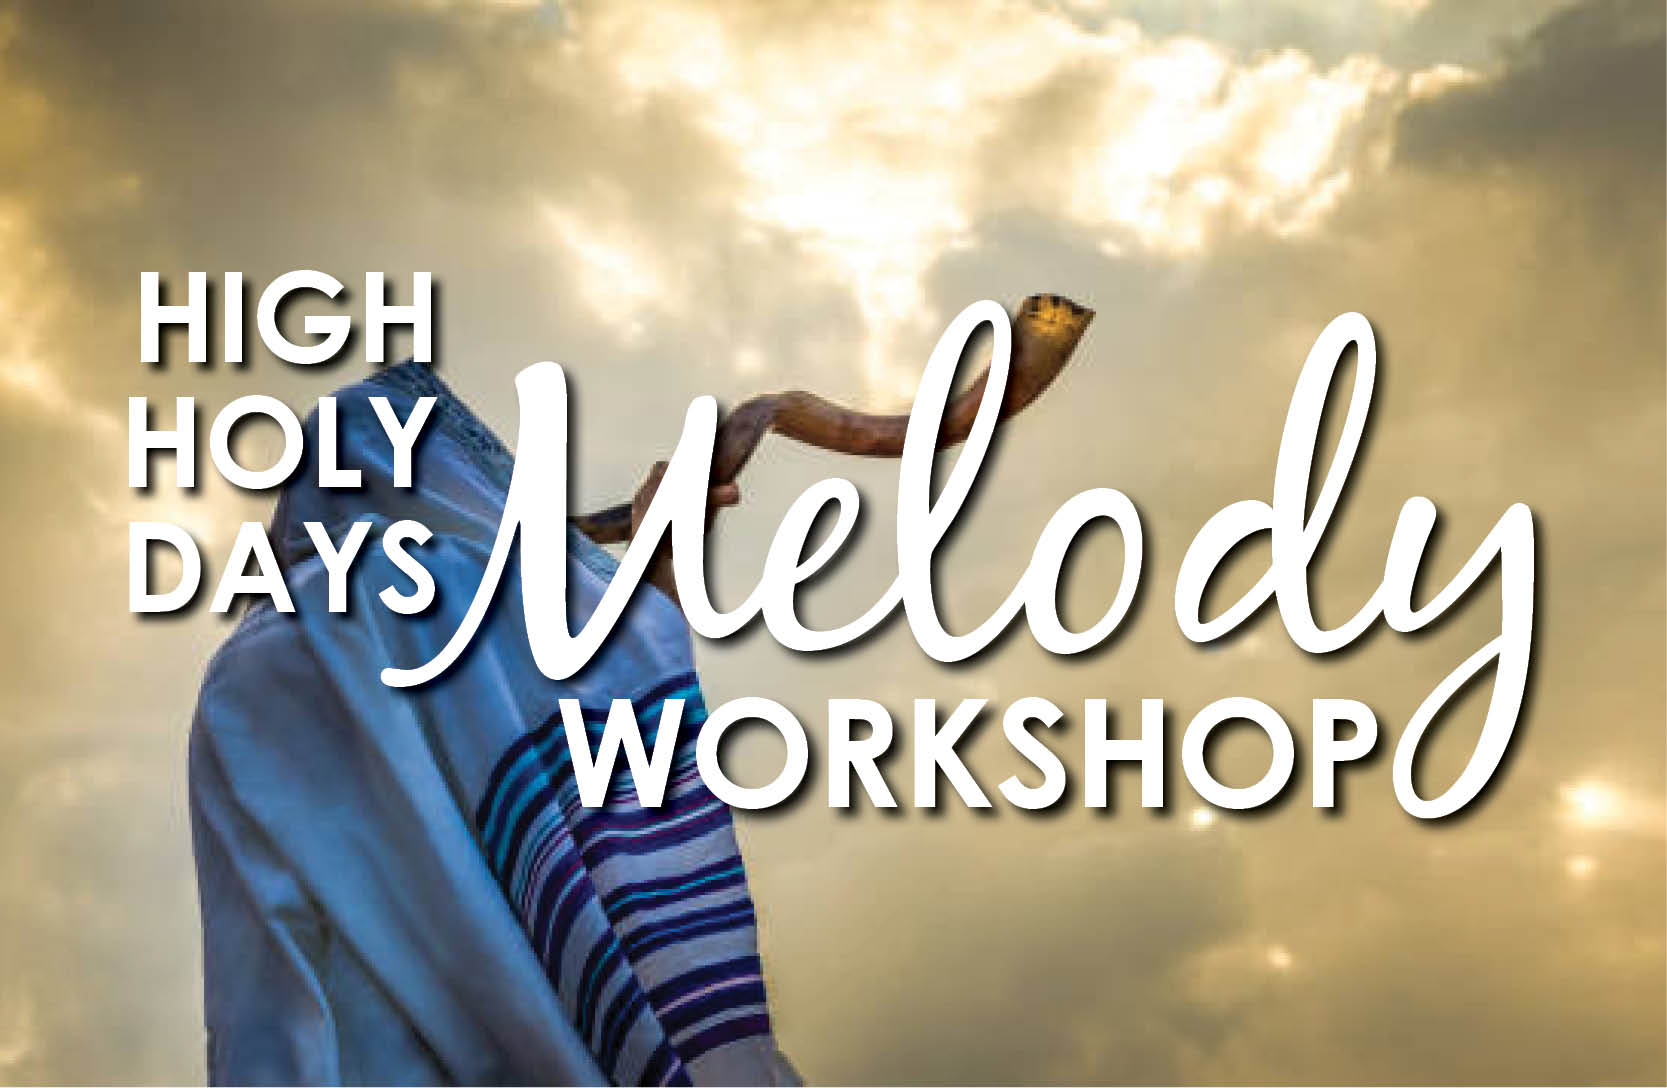 High Holy Days Melody Workshop